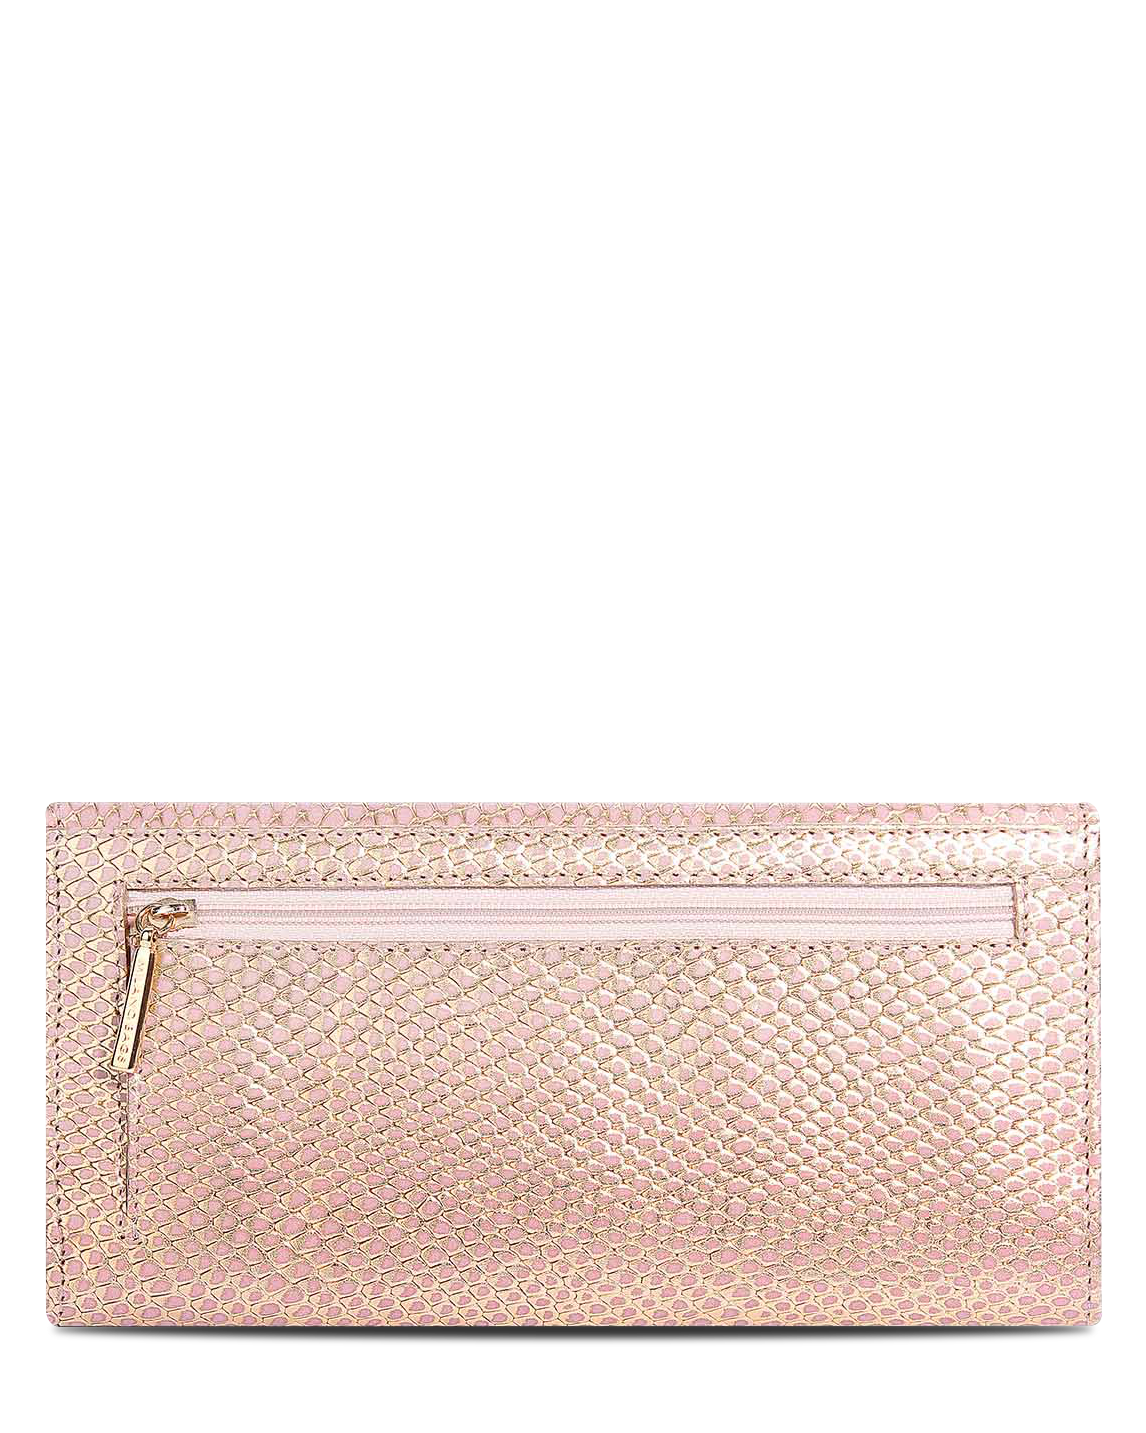 Billetera de Mujer BM-500 Color Rosa